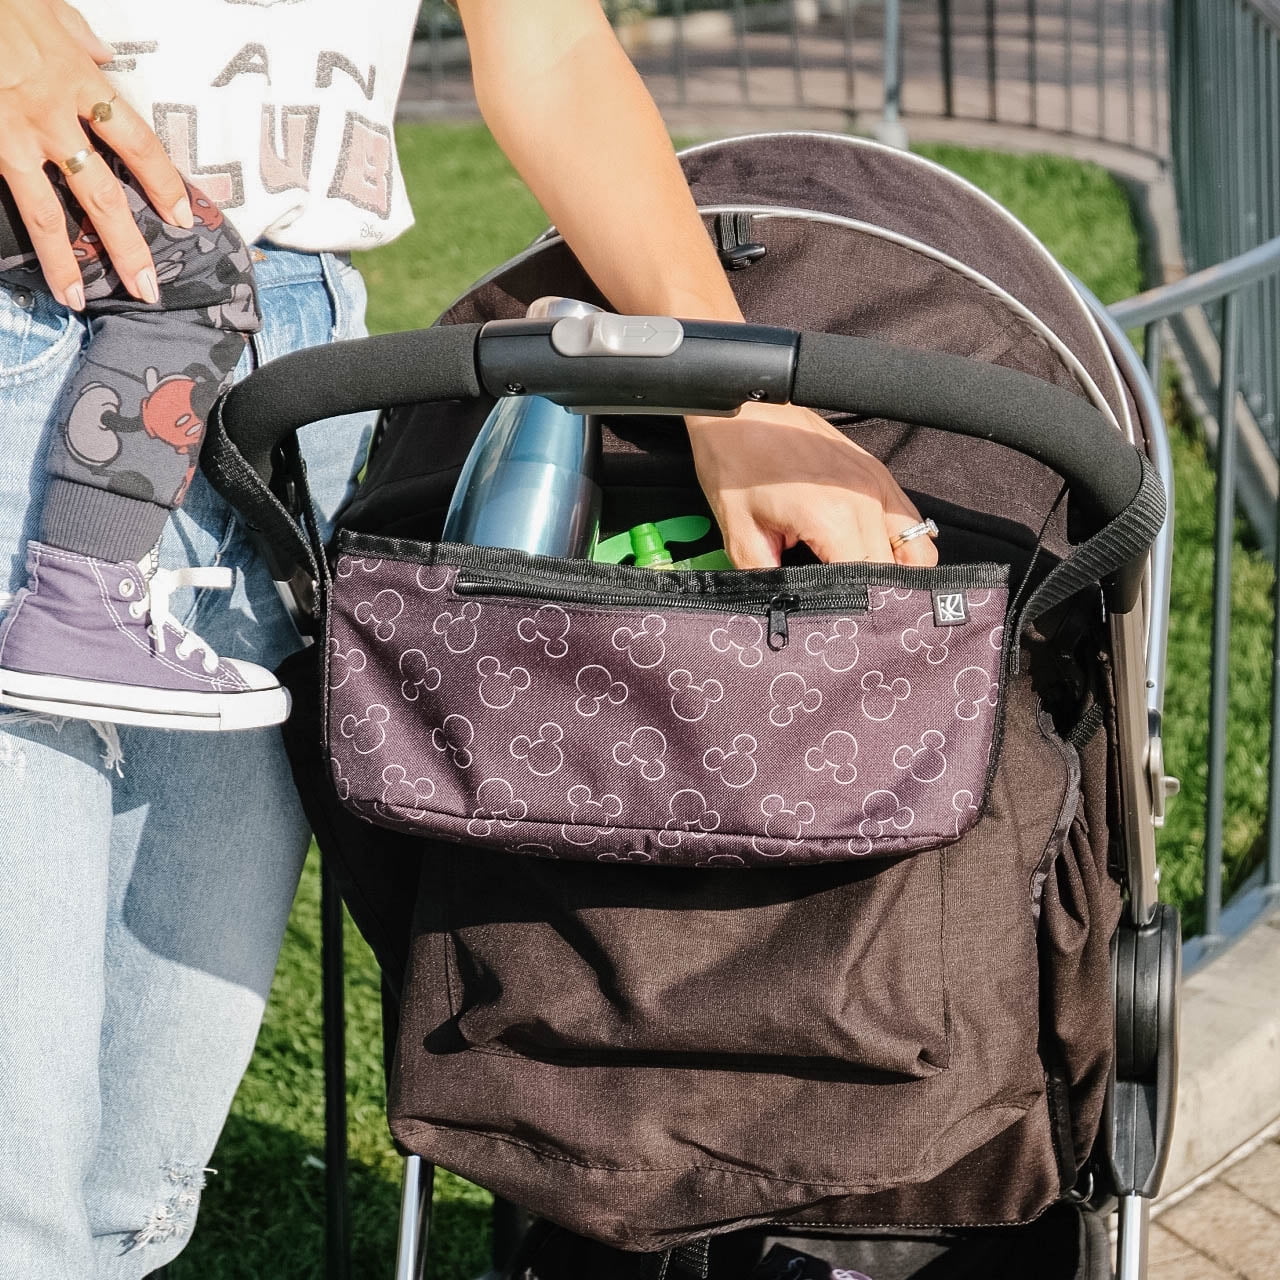 Disney Baby By J.l. Childress Universal Stroller Cup Holder : Target